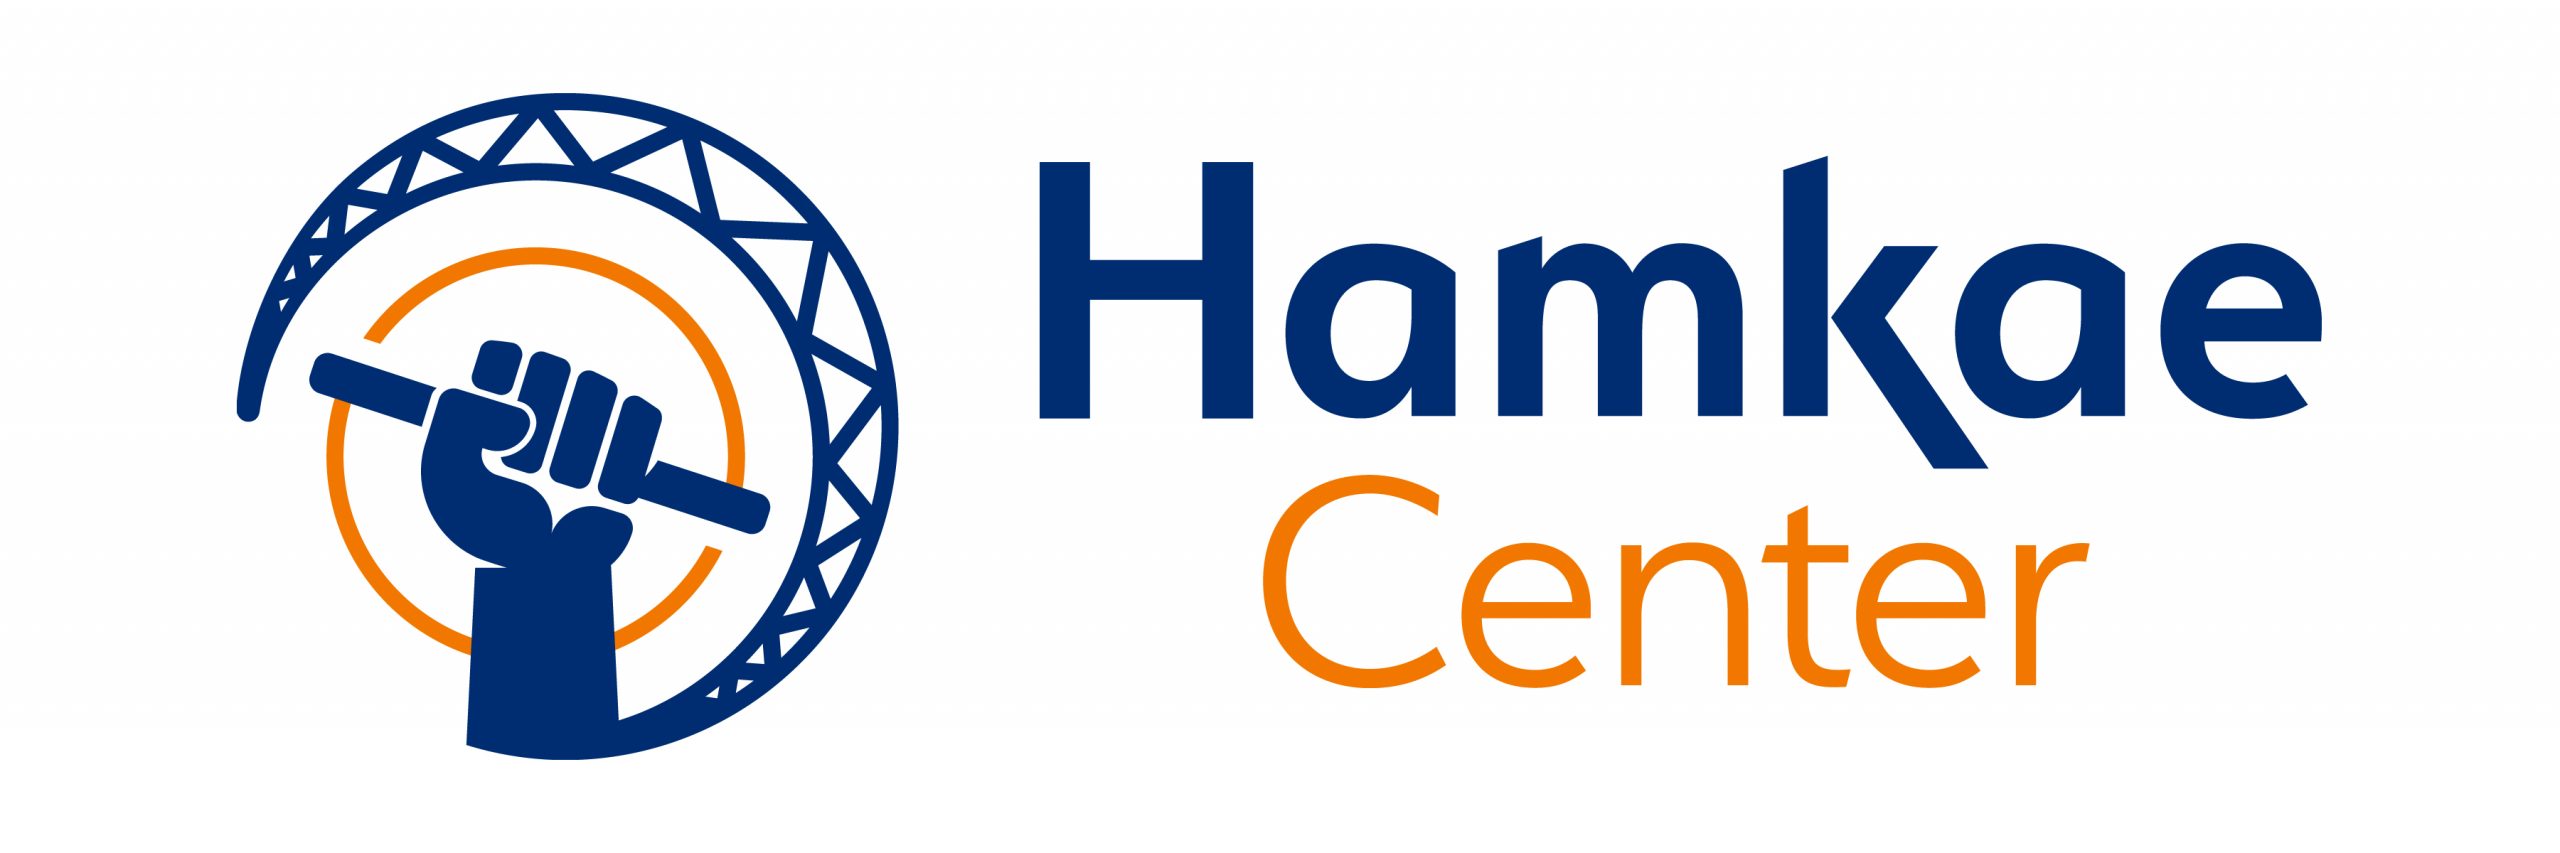 Hamkae Center